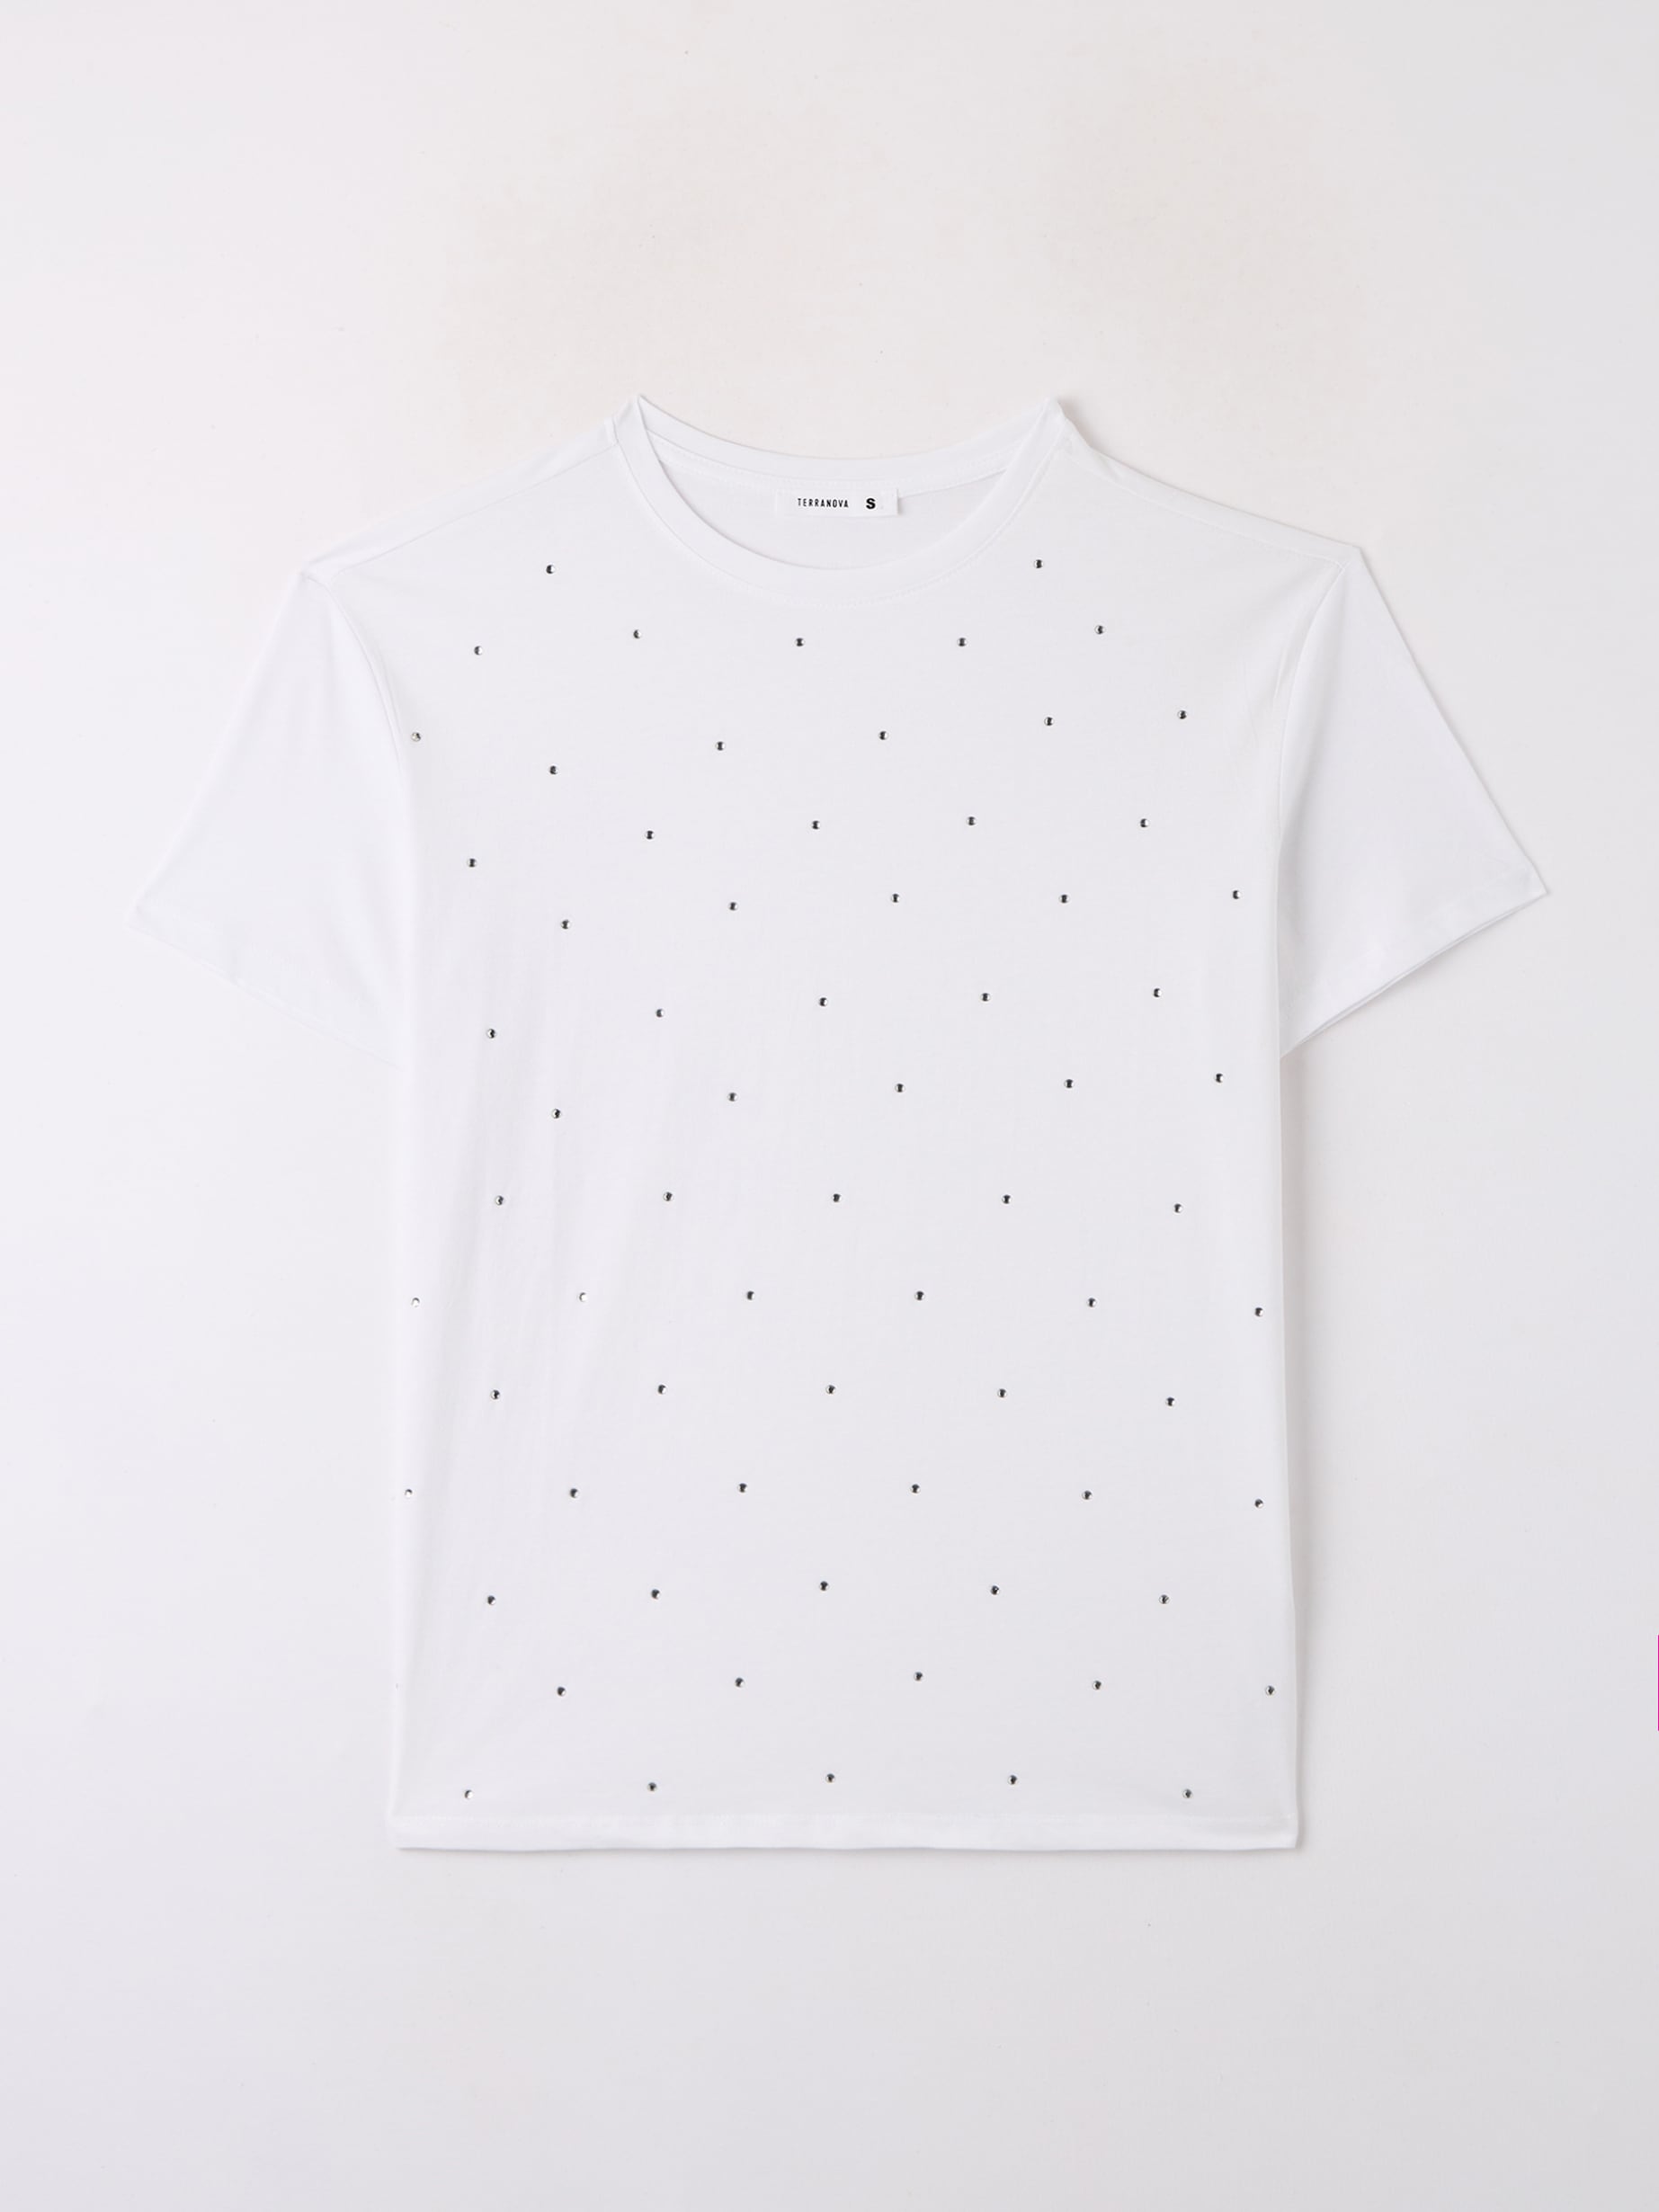 Optical white Crew neck T-shirt rhinestone | Online with - Buy Terranova